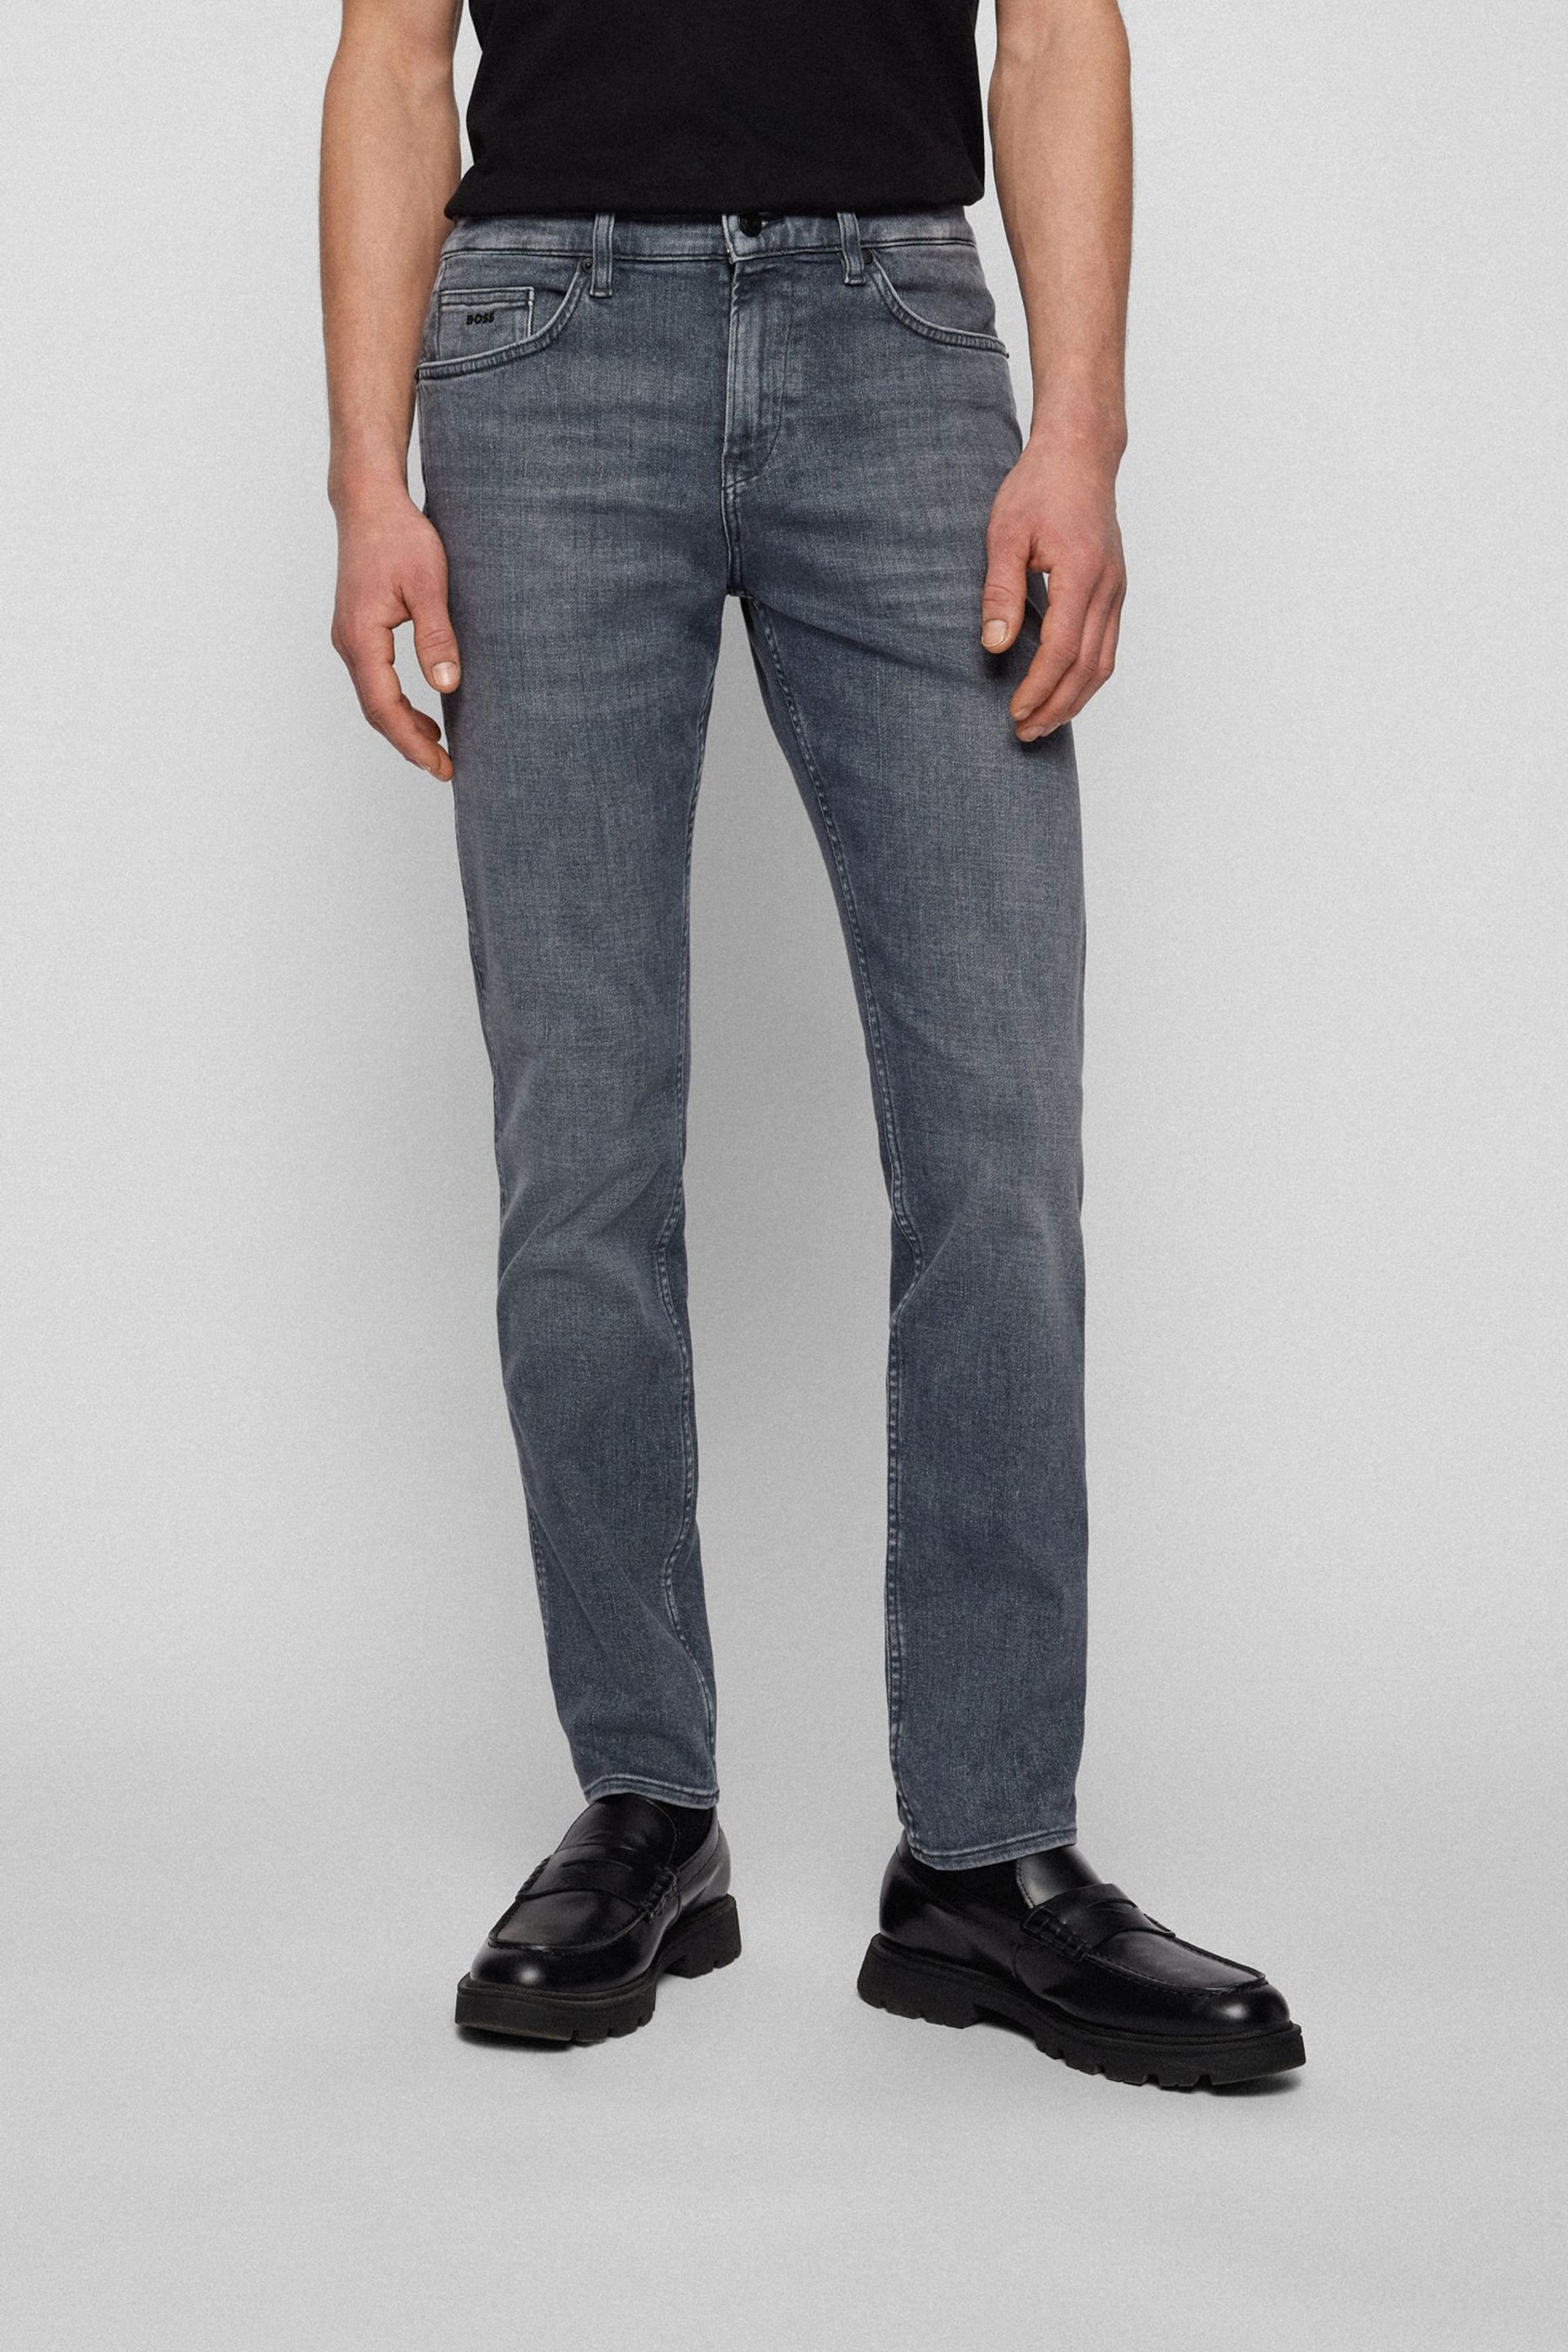 BOSS Light Grey Delaware Slim Fit Jeans - Image 1 of 4